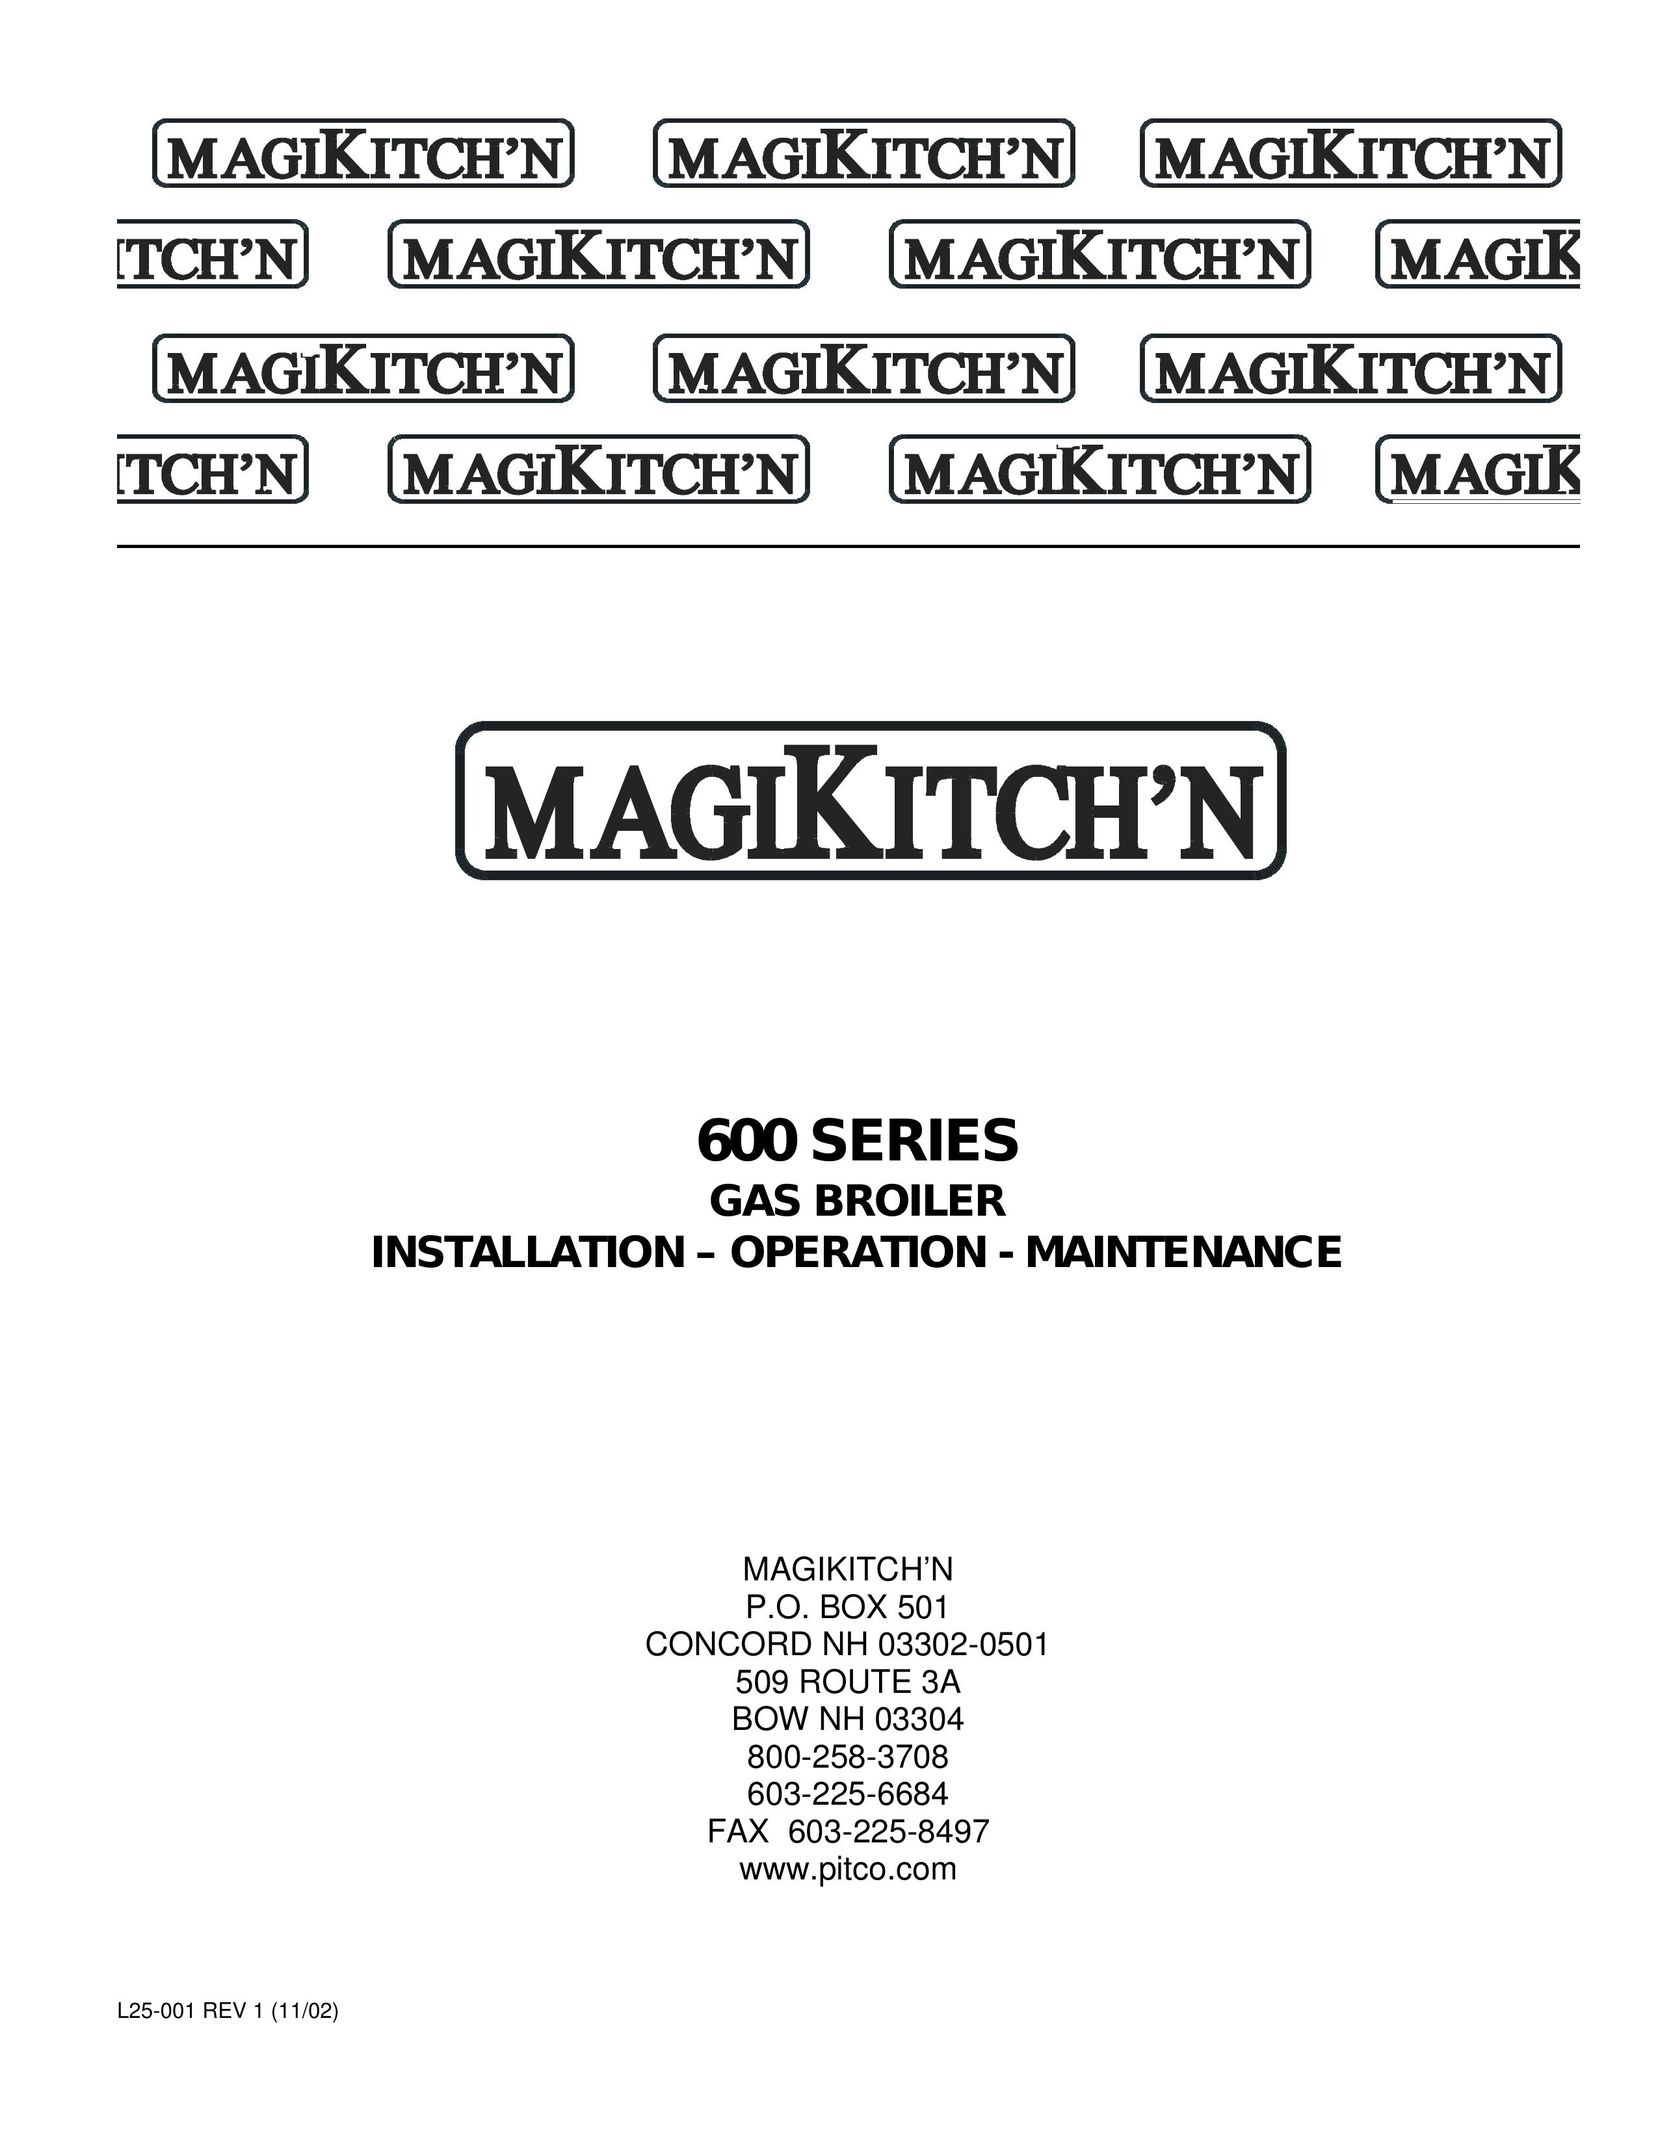 Magikitch'n 600 SERIES Oven User Manual